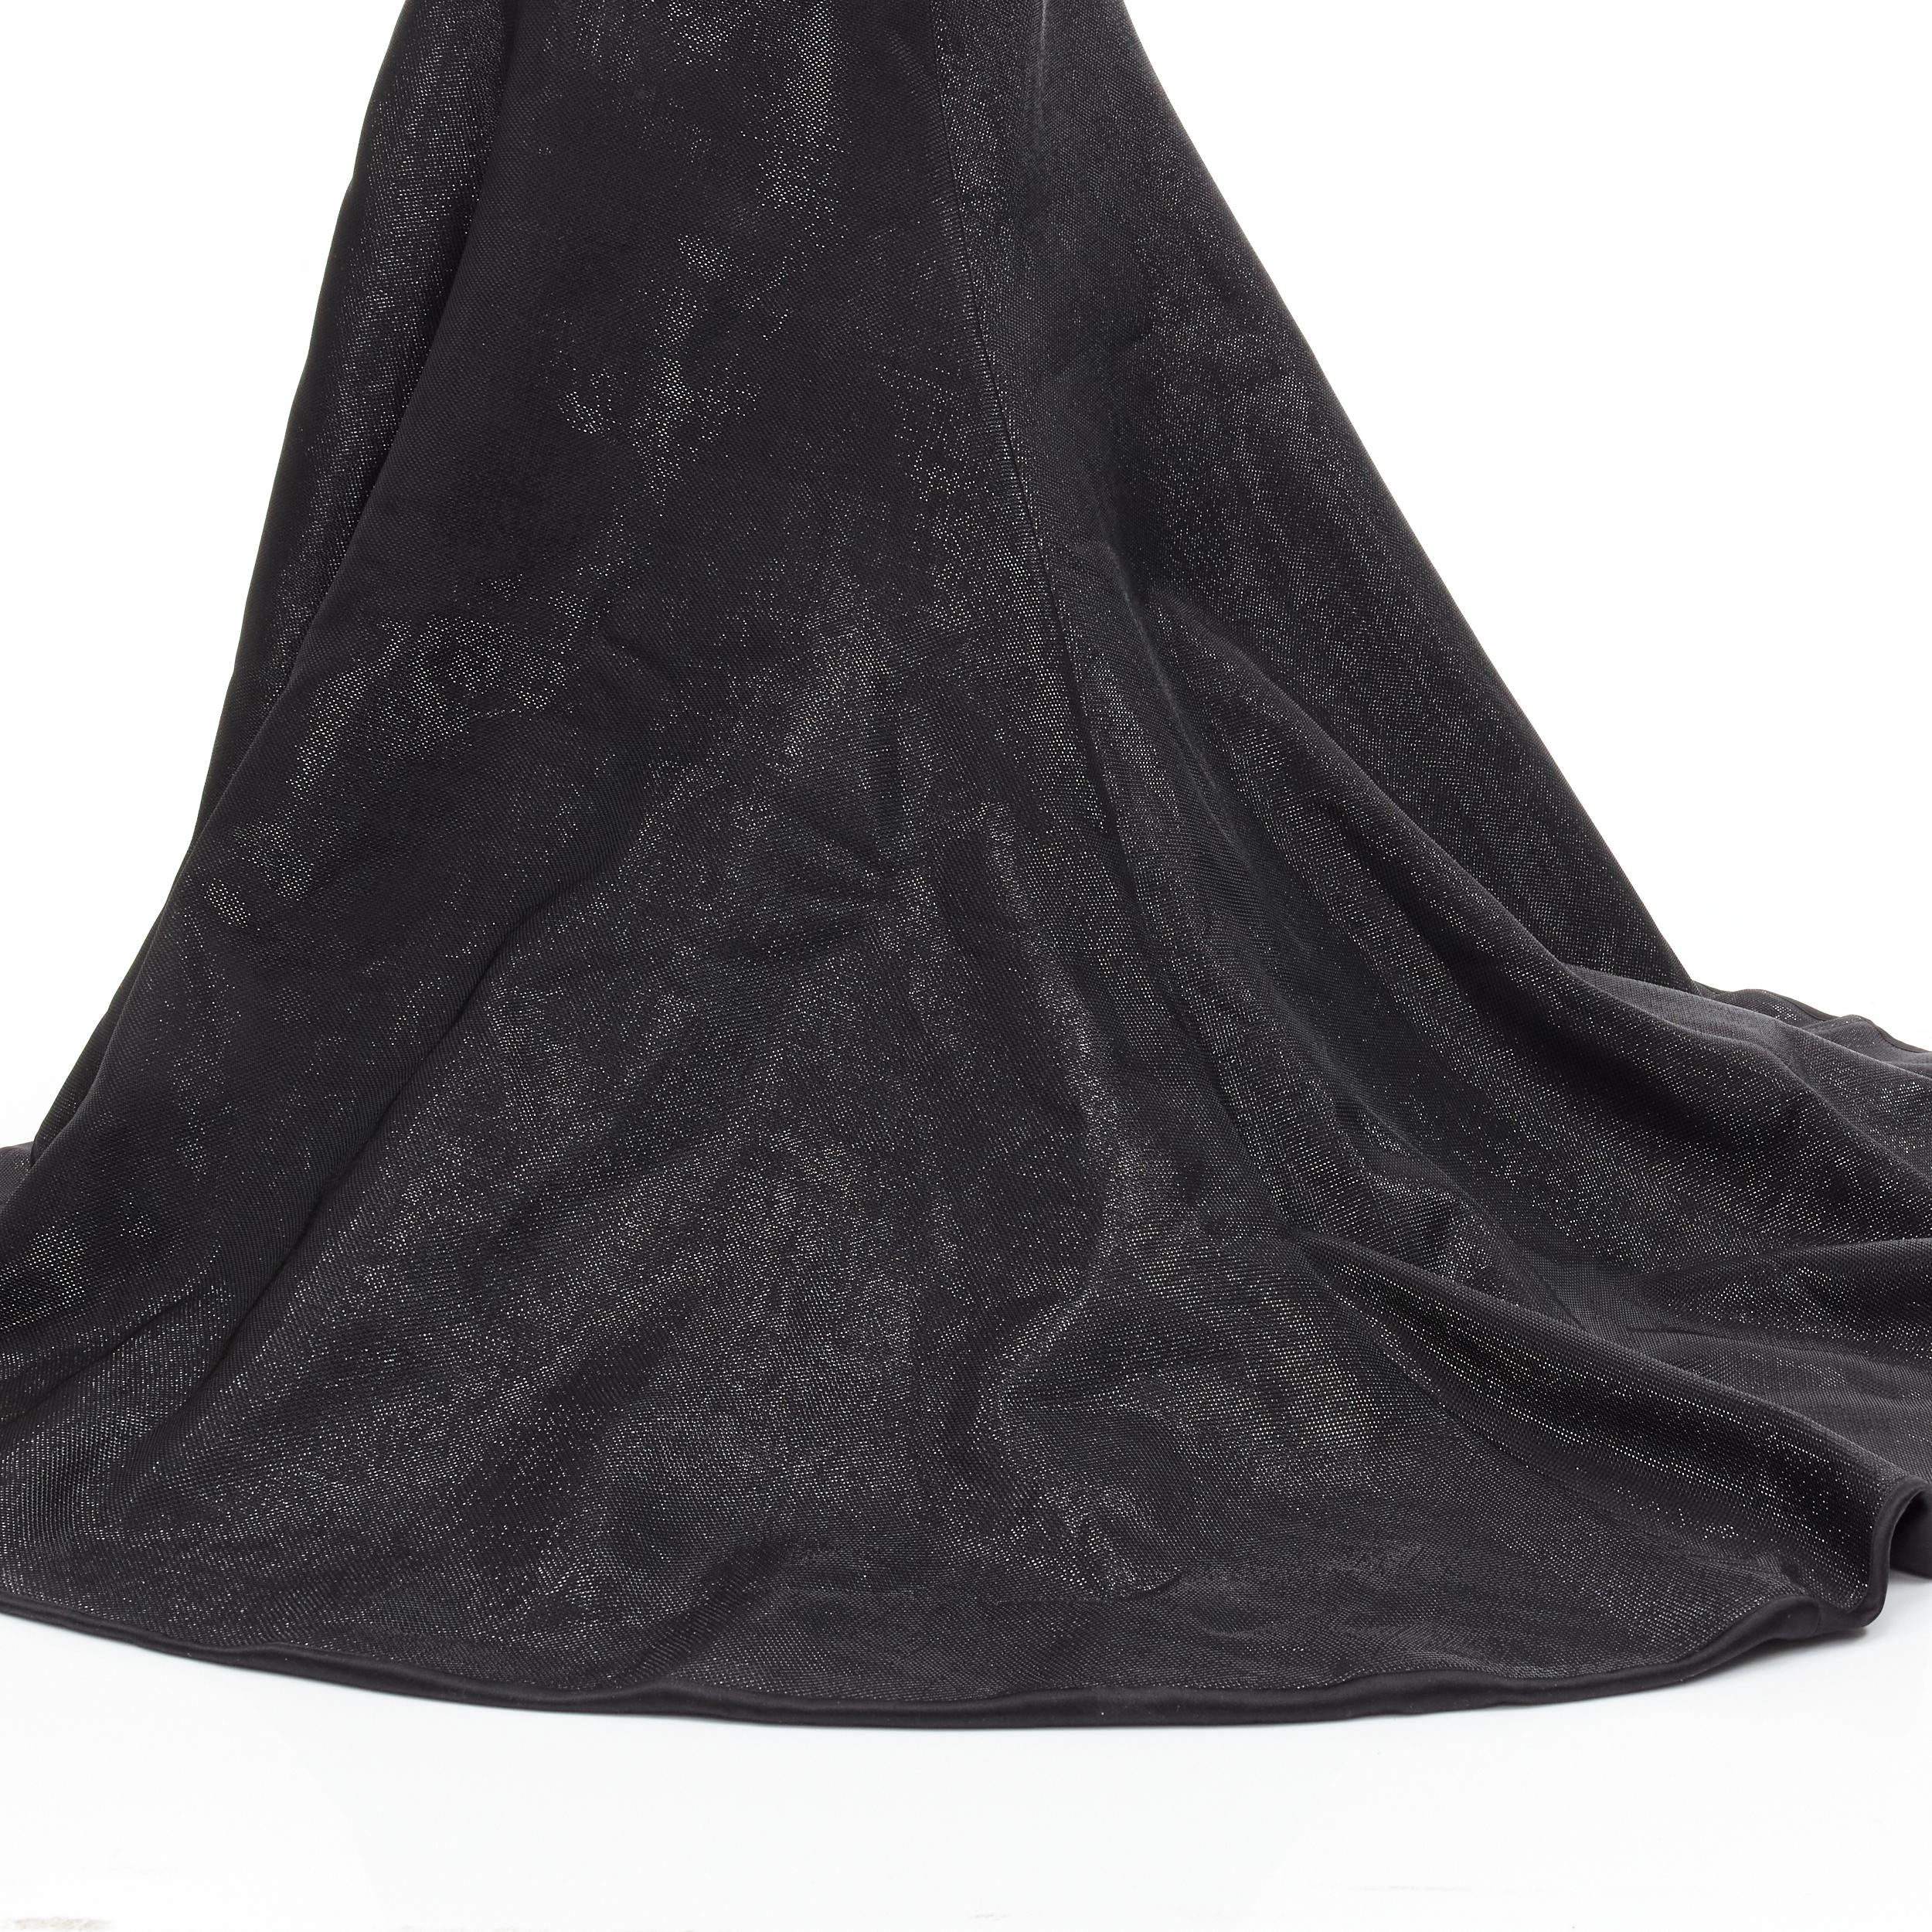 MATICEVSKI 2020 Runway Significant Gown black crisp halter cascade AUS10  S 3